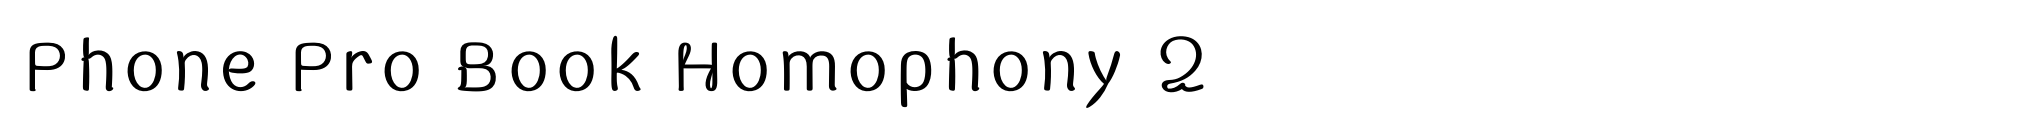 Phone Pro Book Homophony 2 image